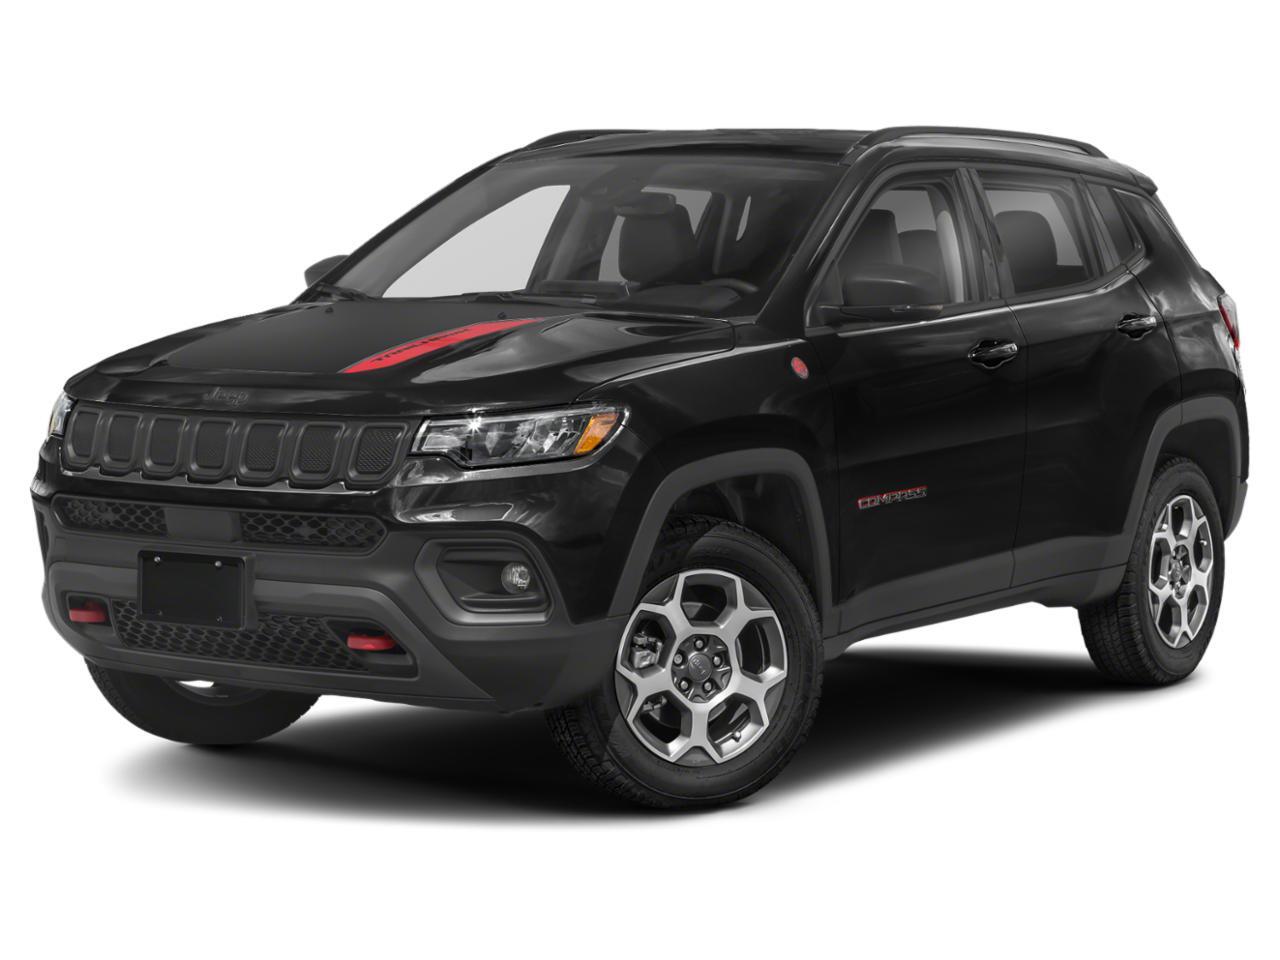 2022 Jeep Compass 4x4 Trailhawk $259bw, Autostart, Heated Seats, Nav